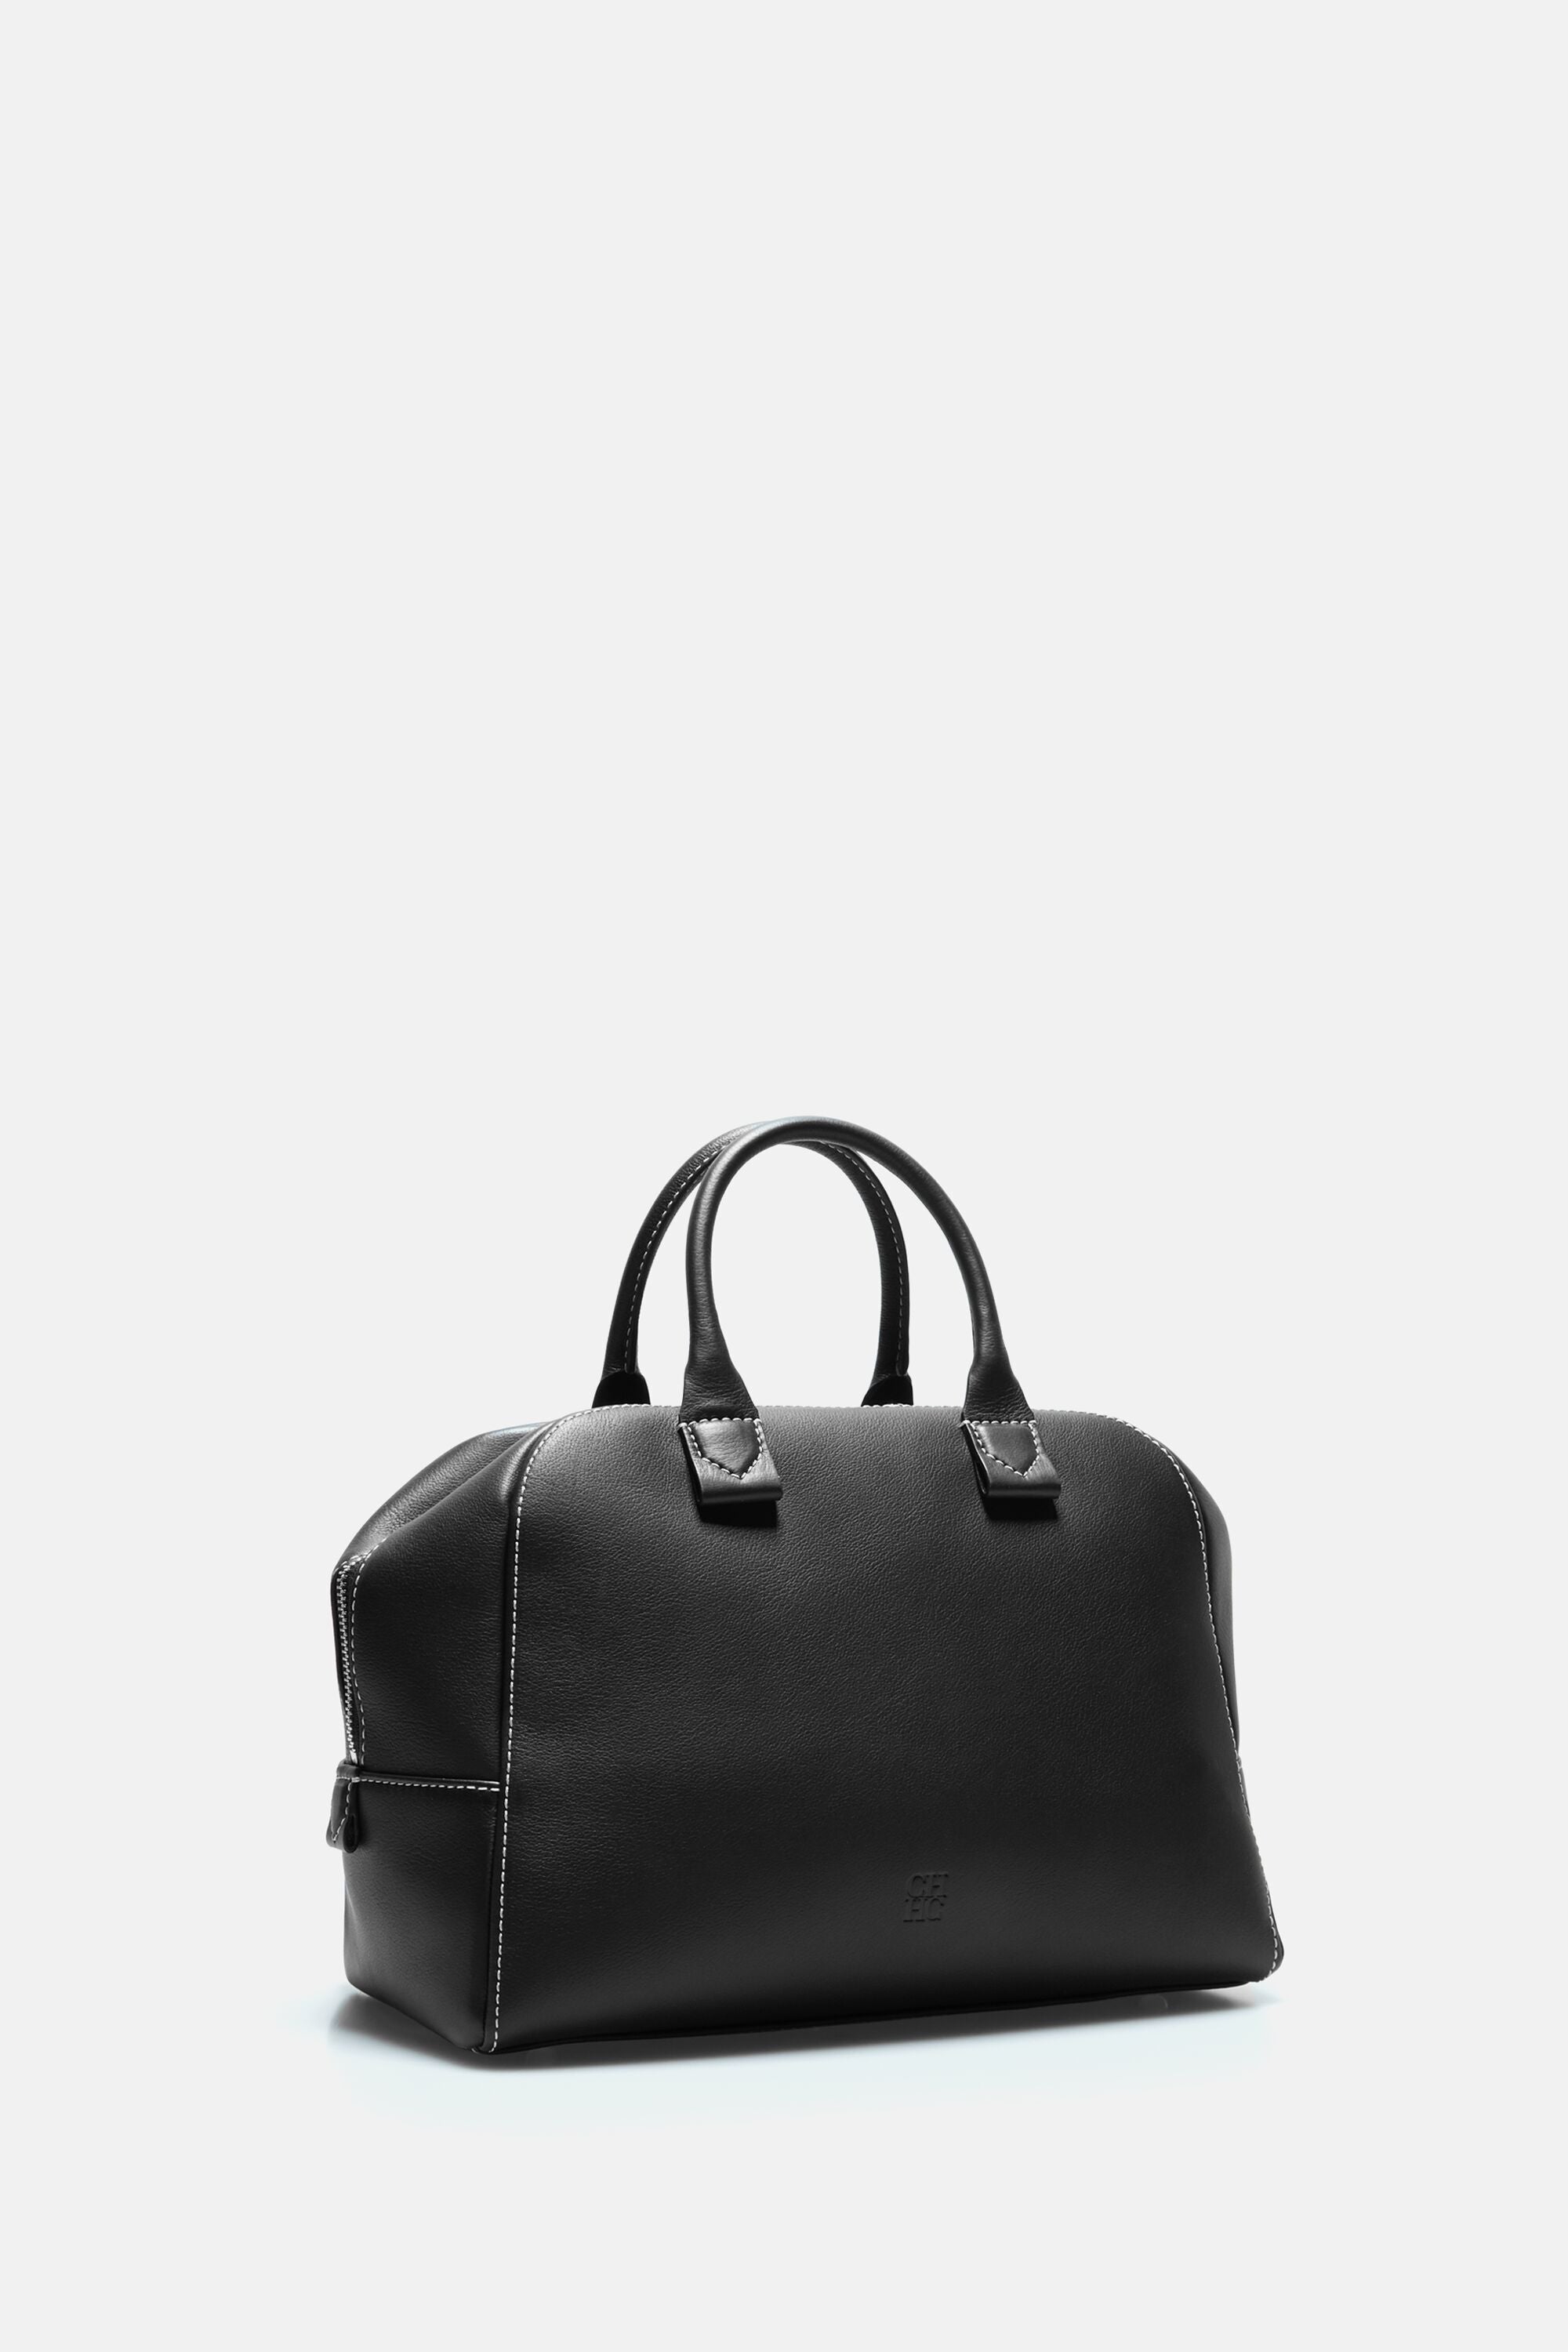 Blasón S | Medium handbag black - CH Carolina Herrera United States